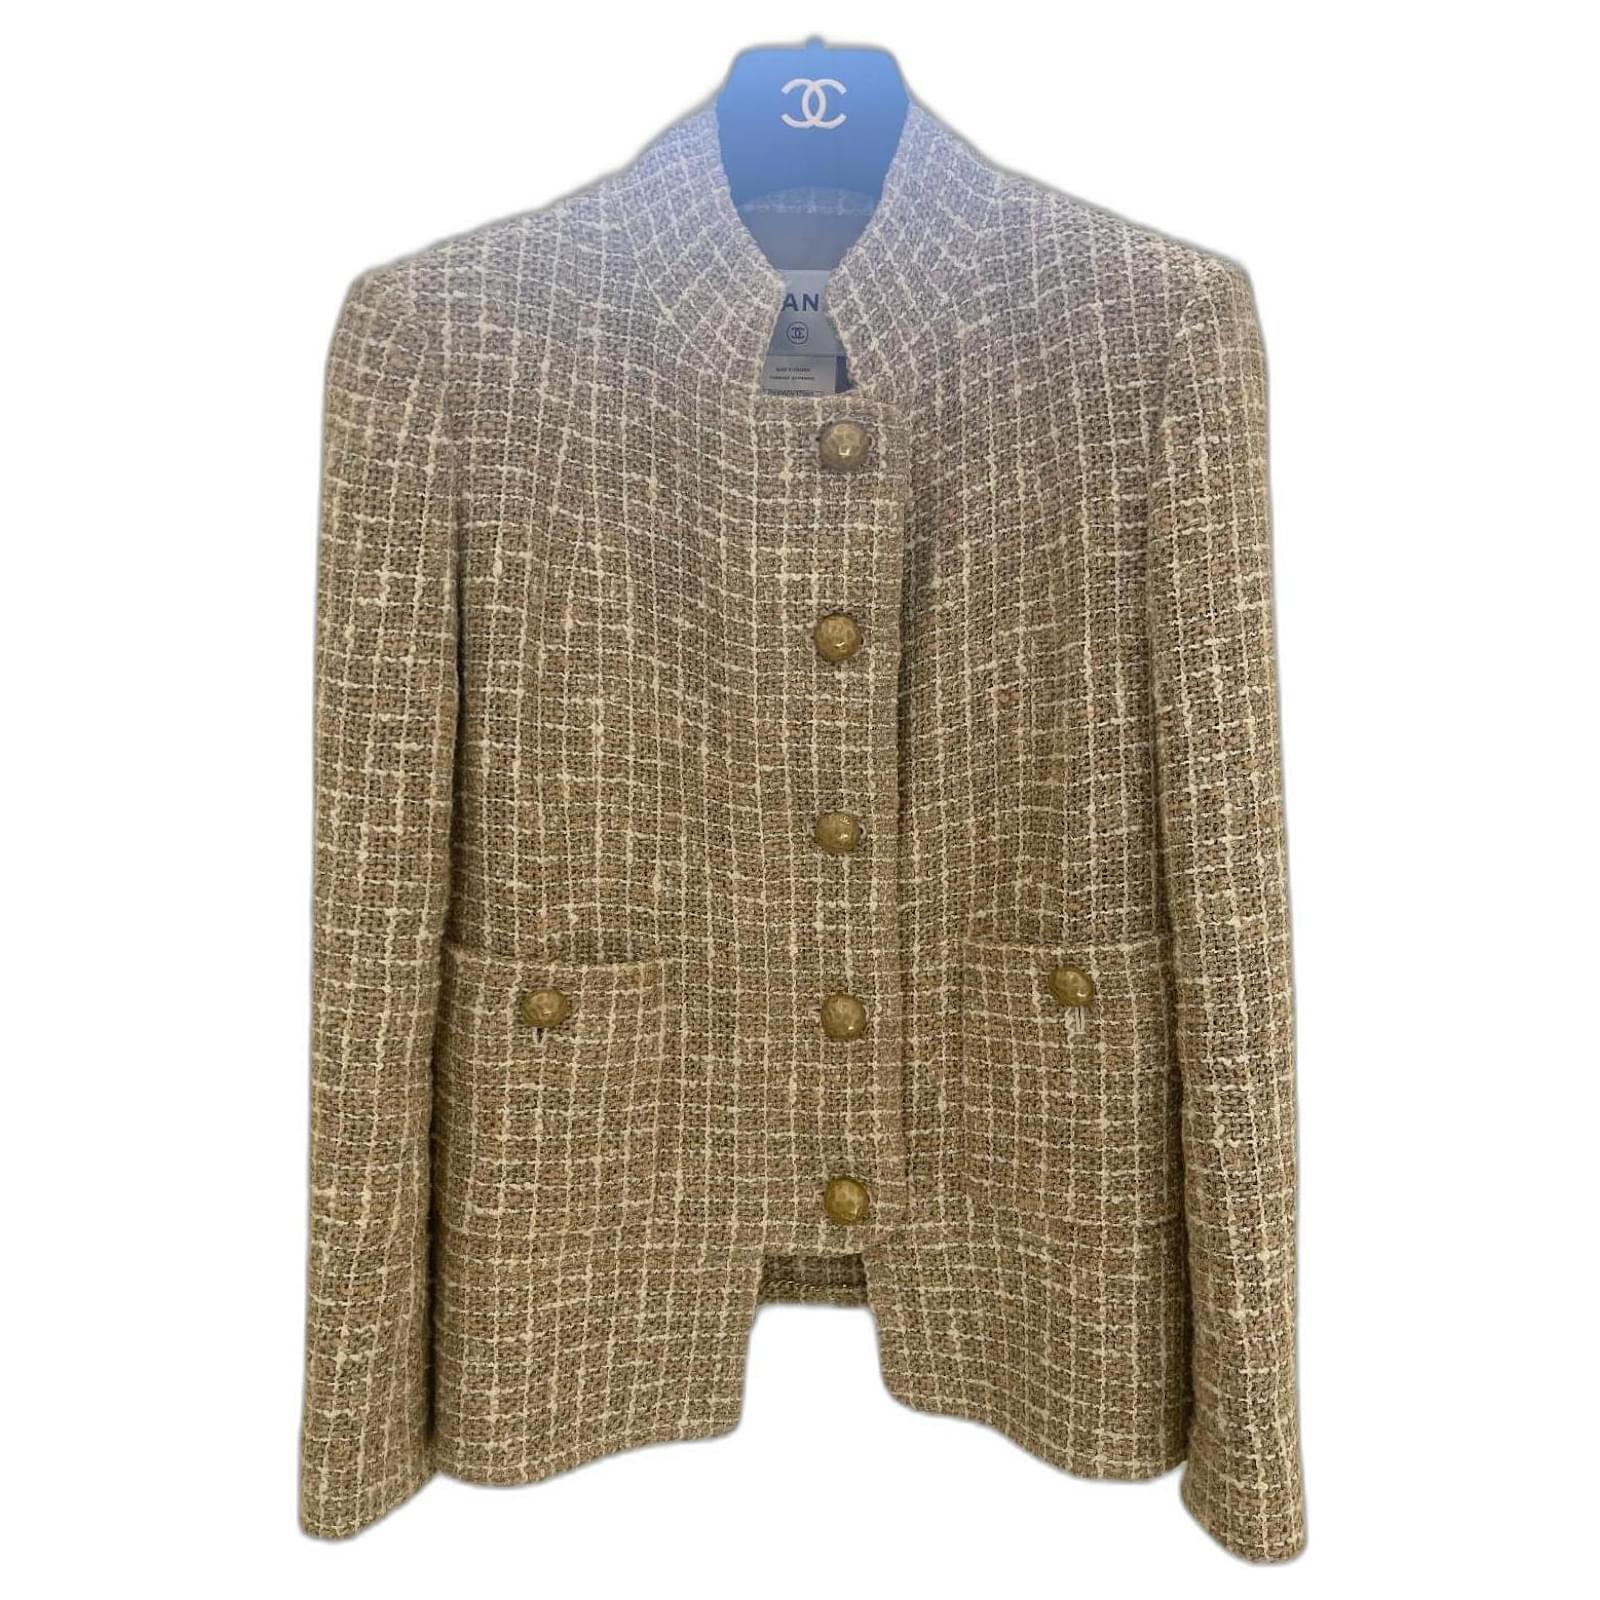 CHANEL, Jackets & Coats, Chanel Classic Iconic Lesage Tweed Jacket